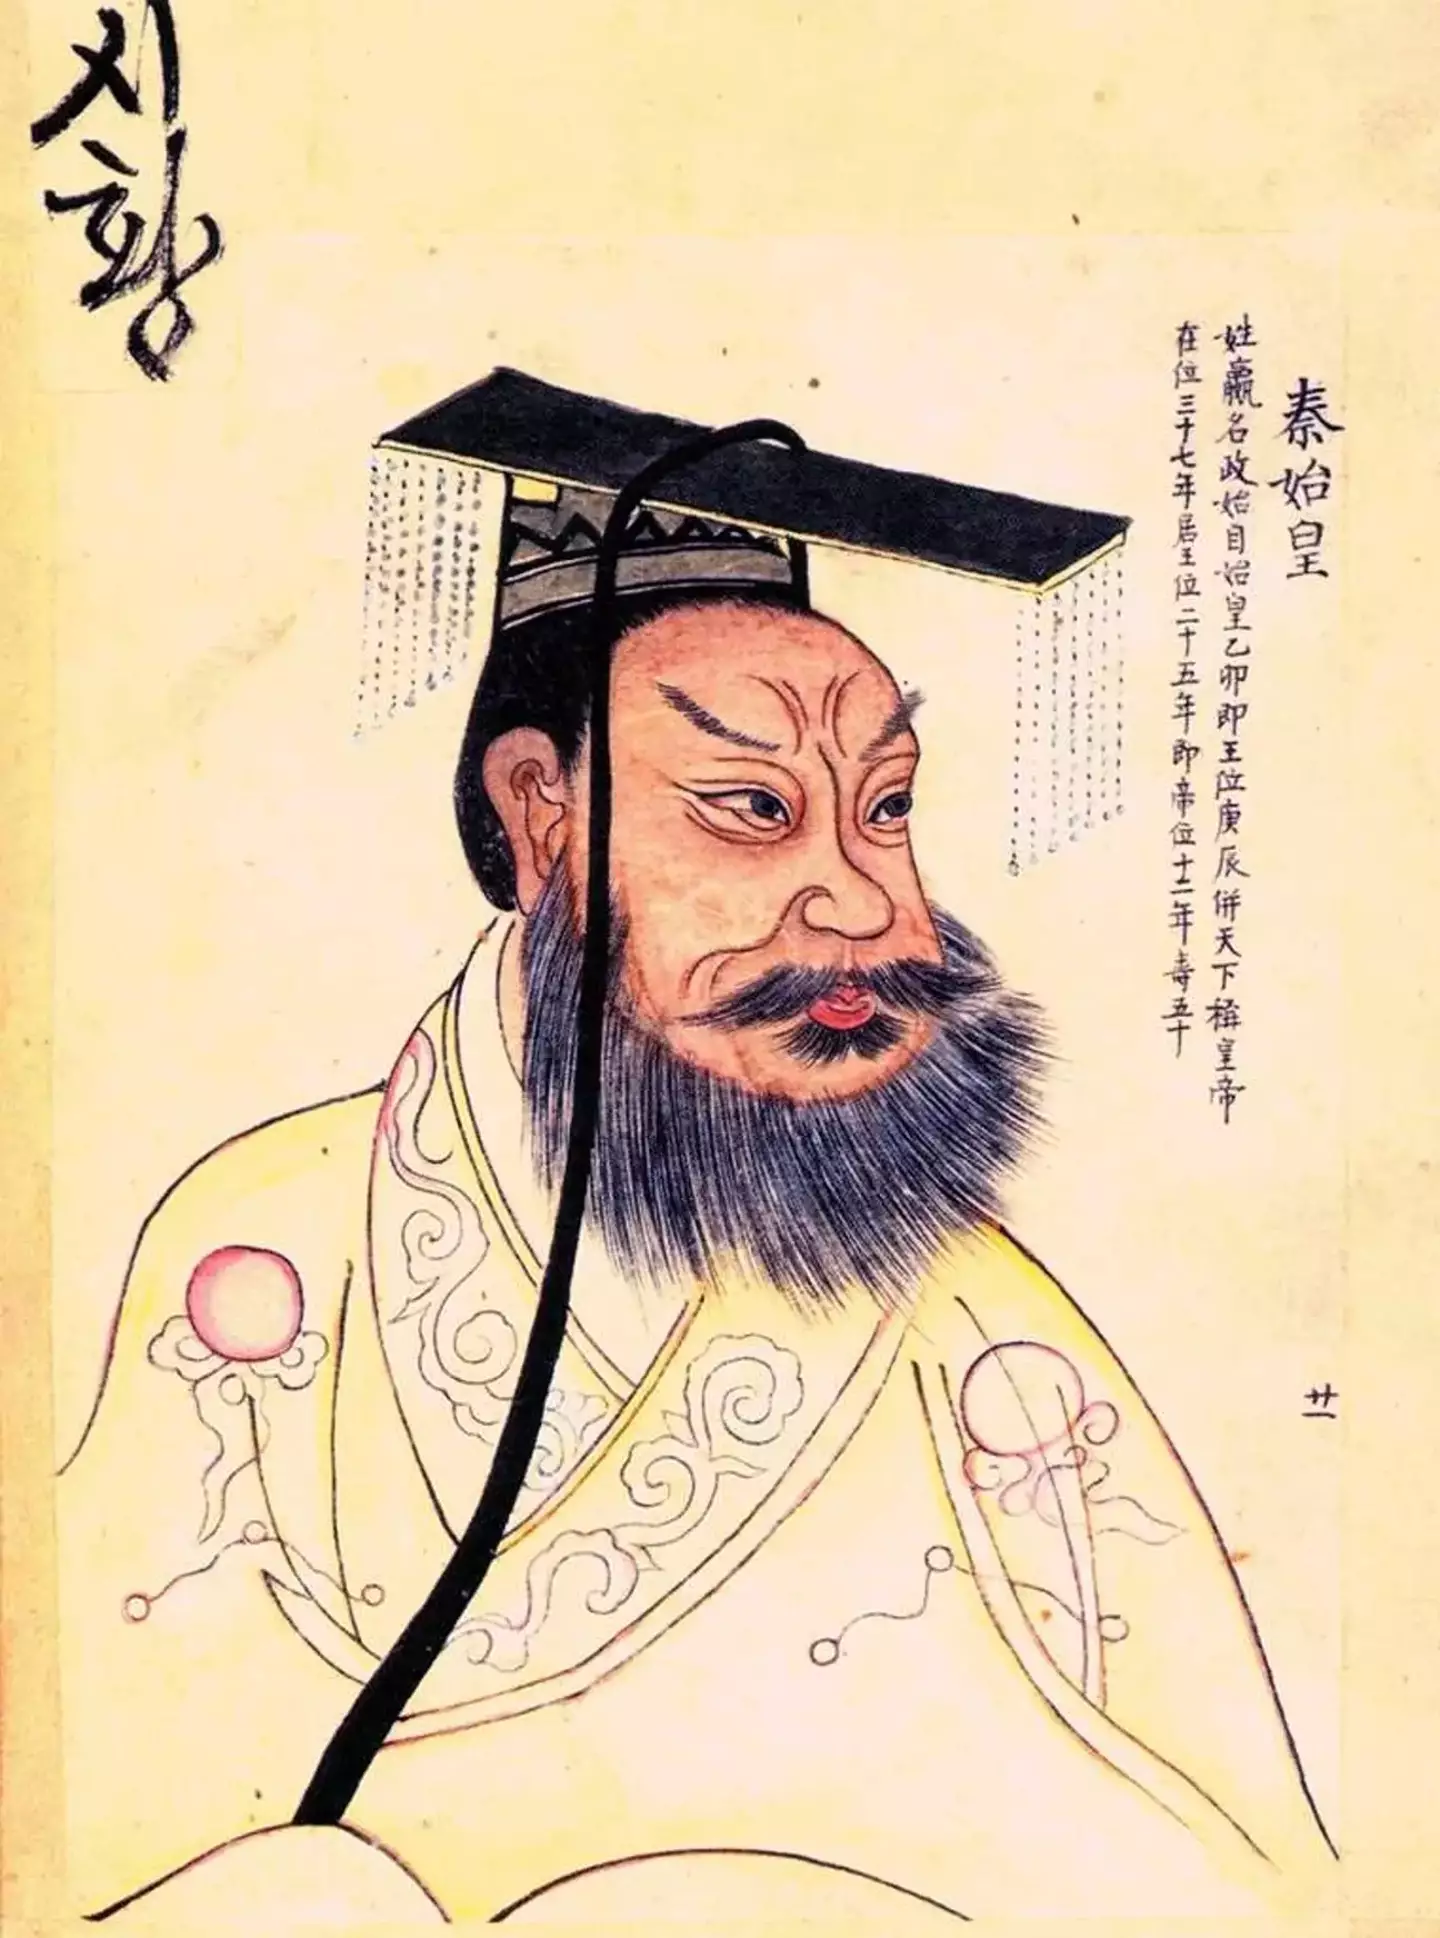 Qin Shi Huang was China's first emperor.